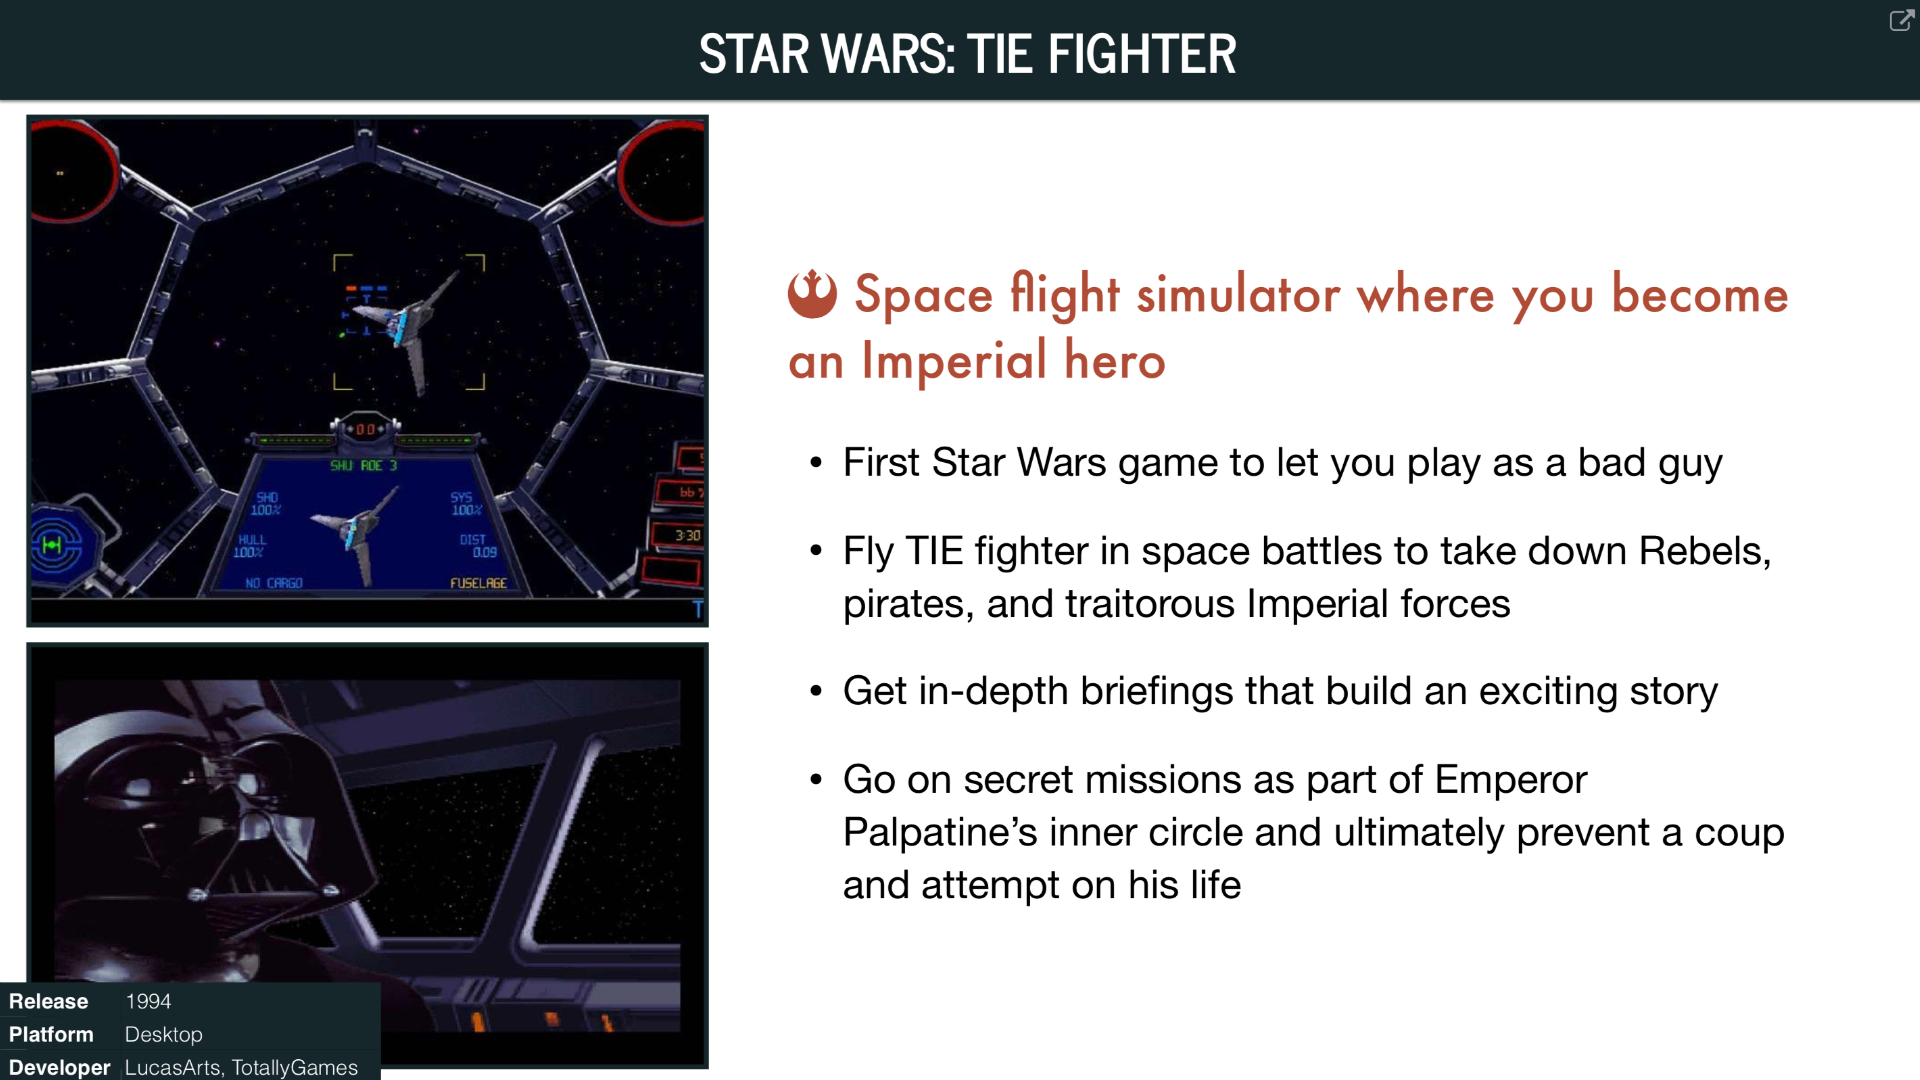 Overview of Star Wars: TIE Fighter (1994)